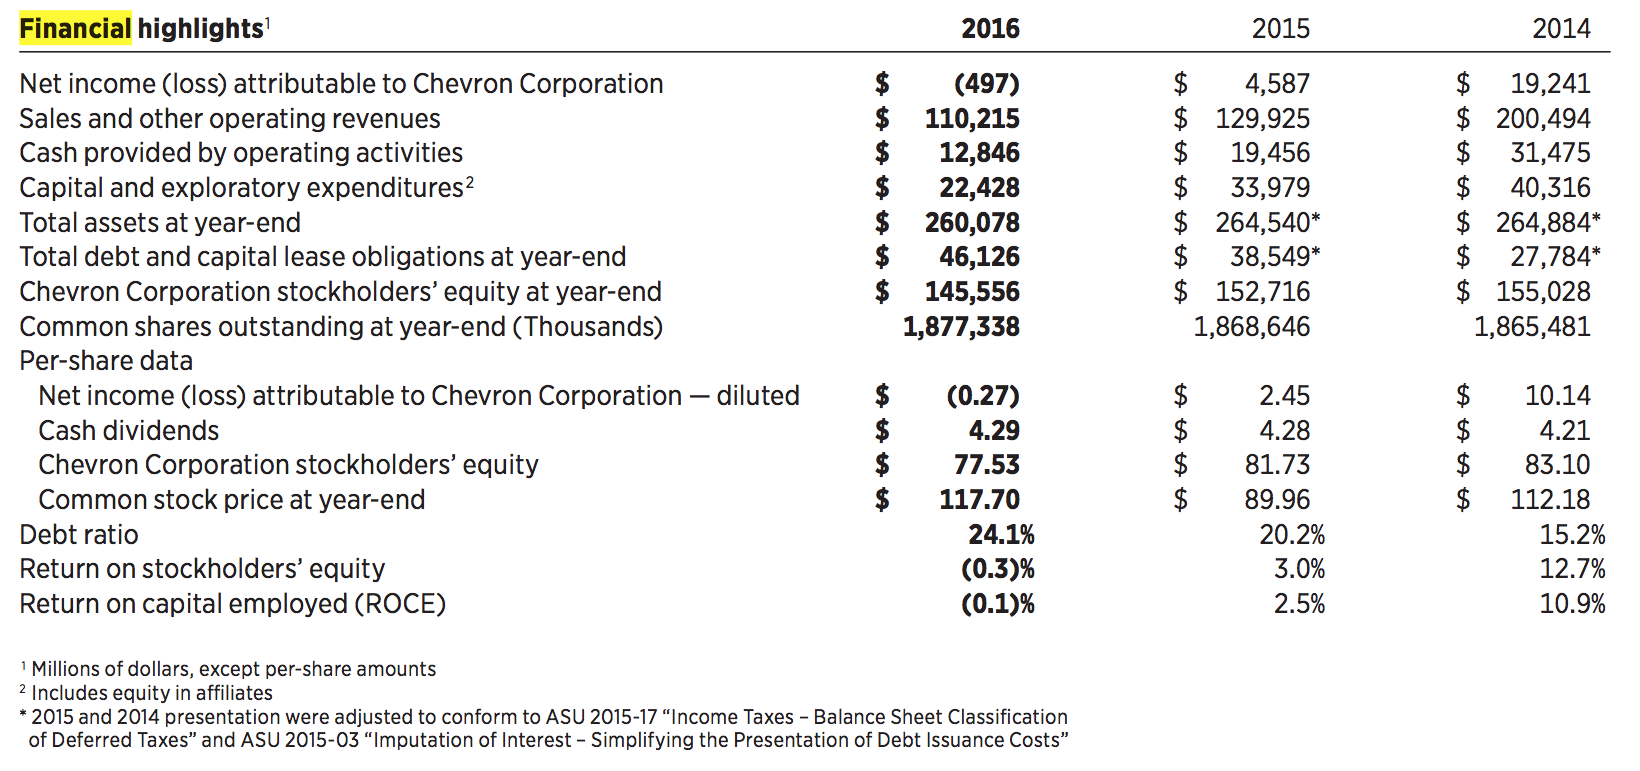 Key Financial Highlights of Chevron.